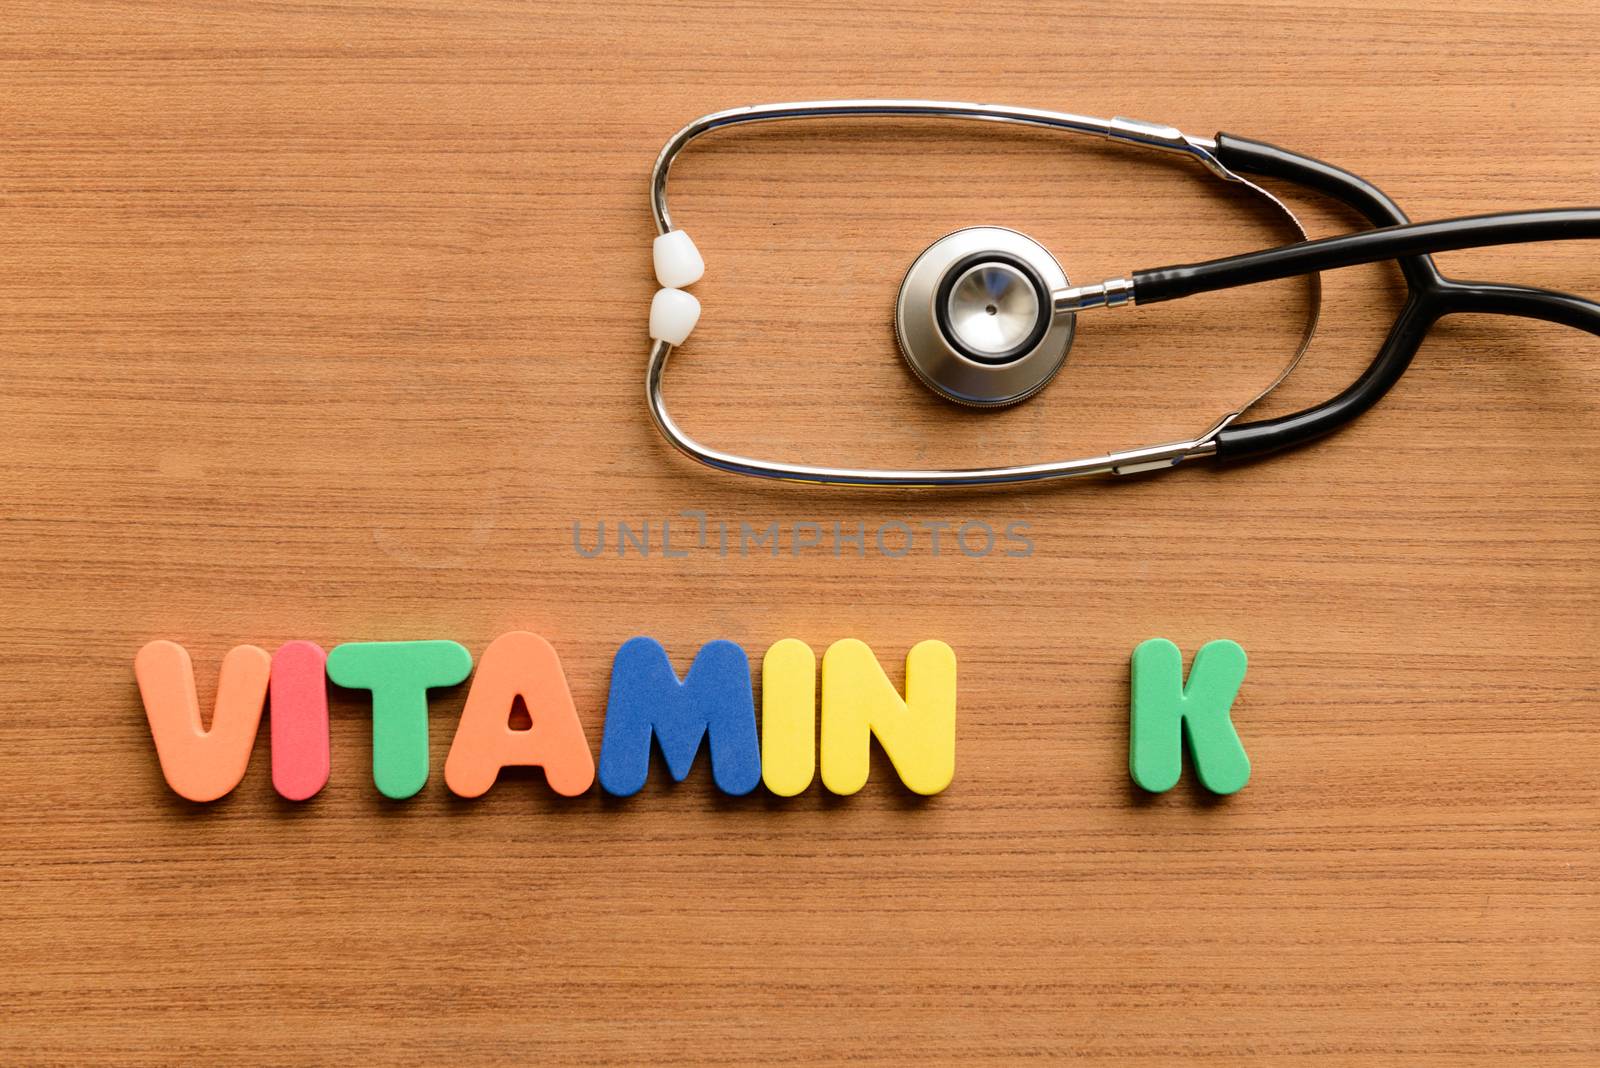 Vitamin K by sohel.parvez@hotmail.com